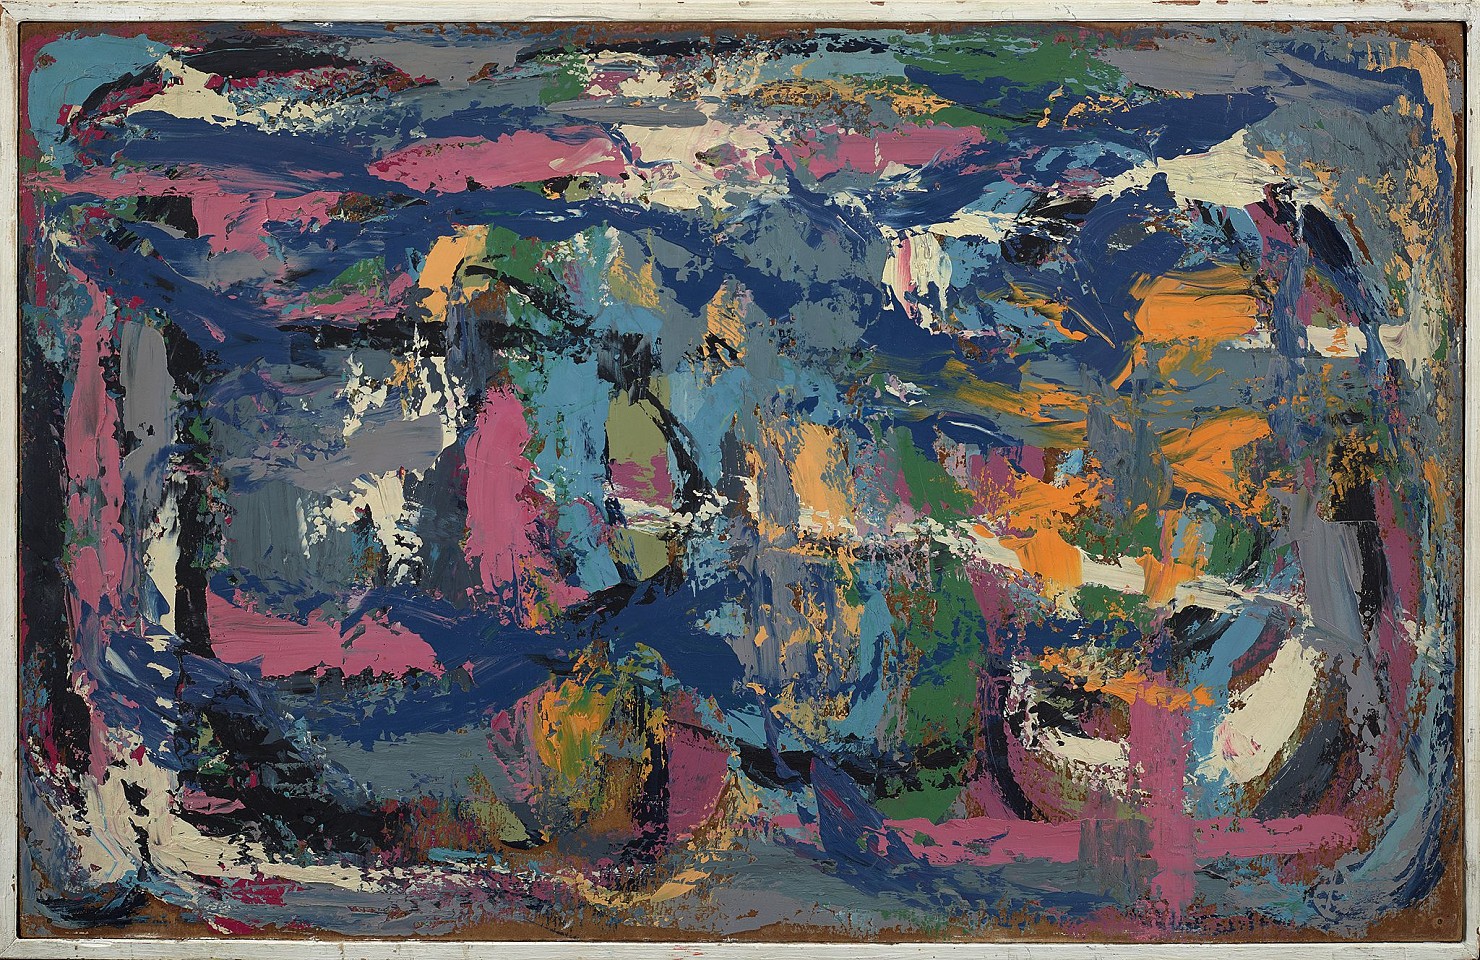 Raymond Hendler, No. 3, 1950
Oil on canvas, 15 x 23 1/4 in. (38.1 x 59 cm)
© Estate of Raymond Hendler
HEN-00225